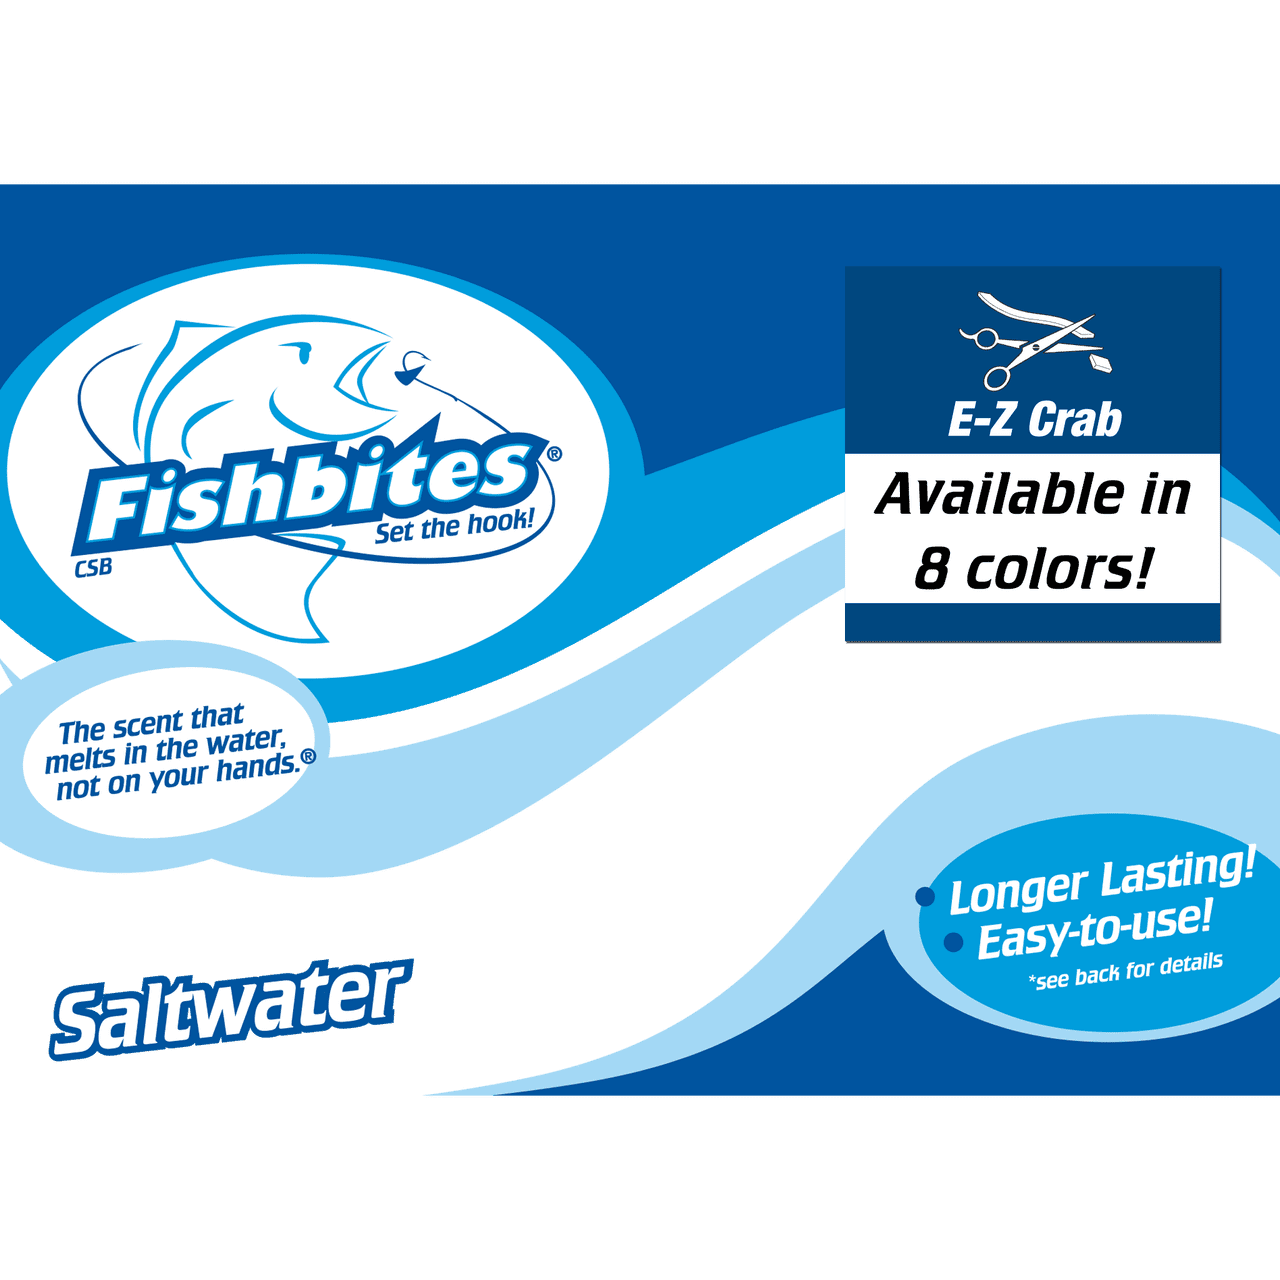 E-Z CRAB LONGER LASTING FISHBITES®